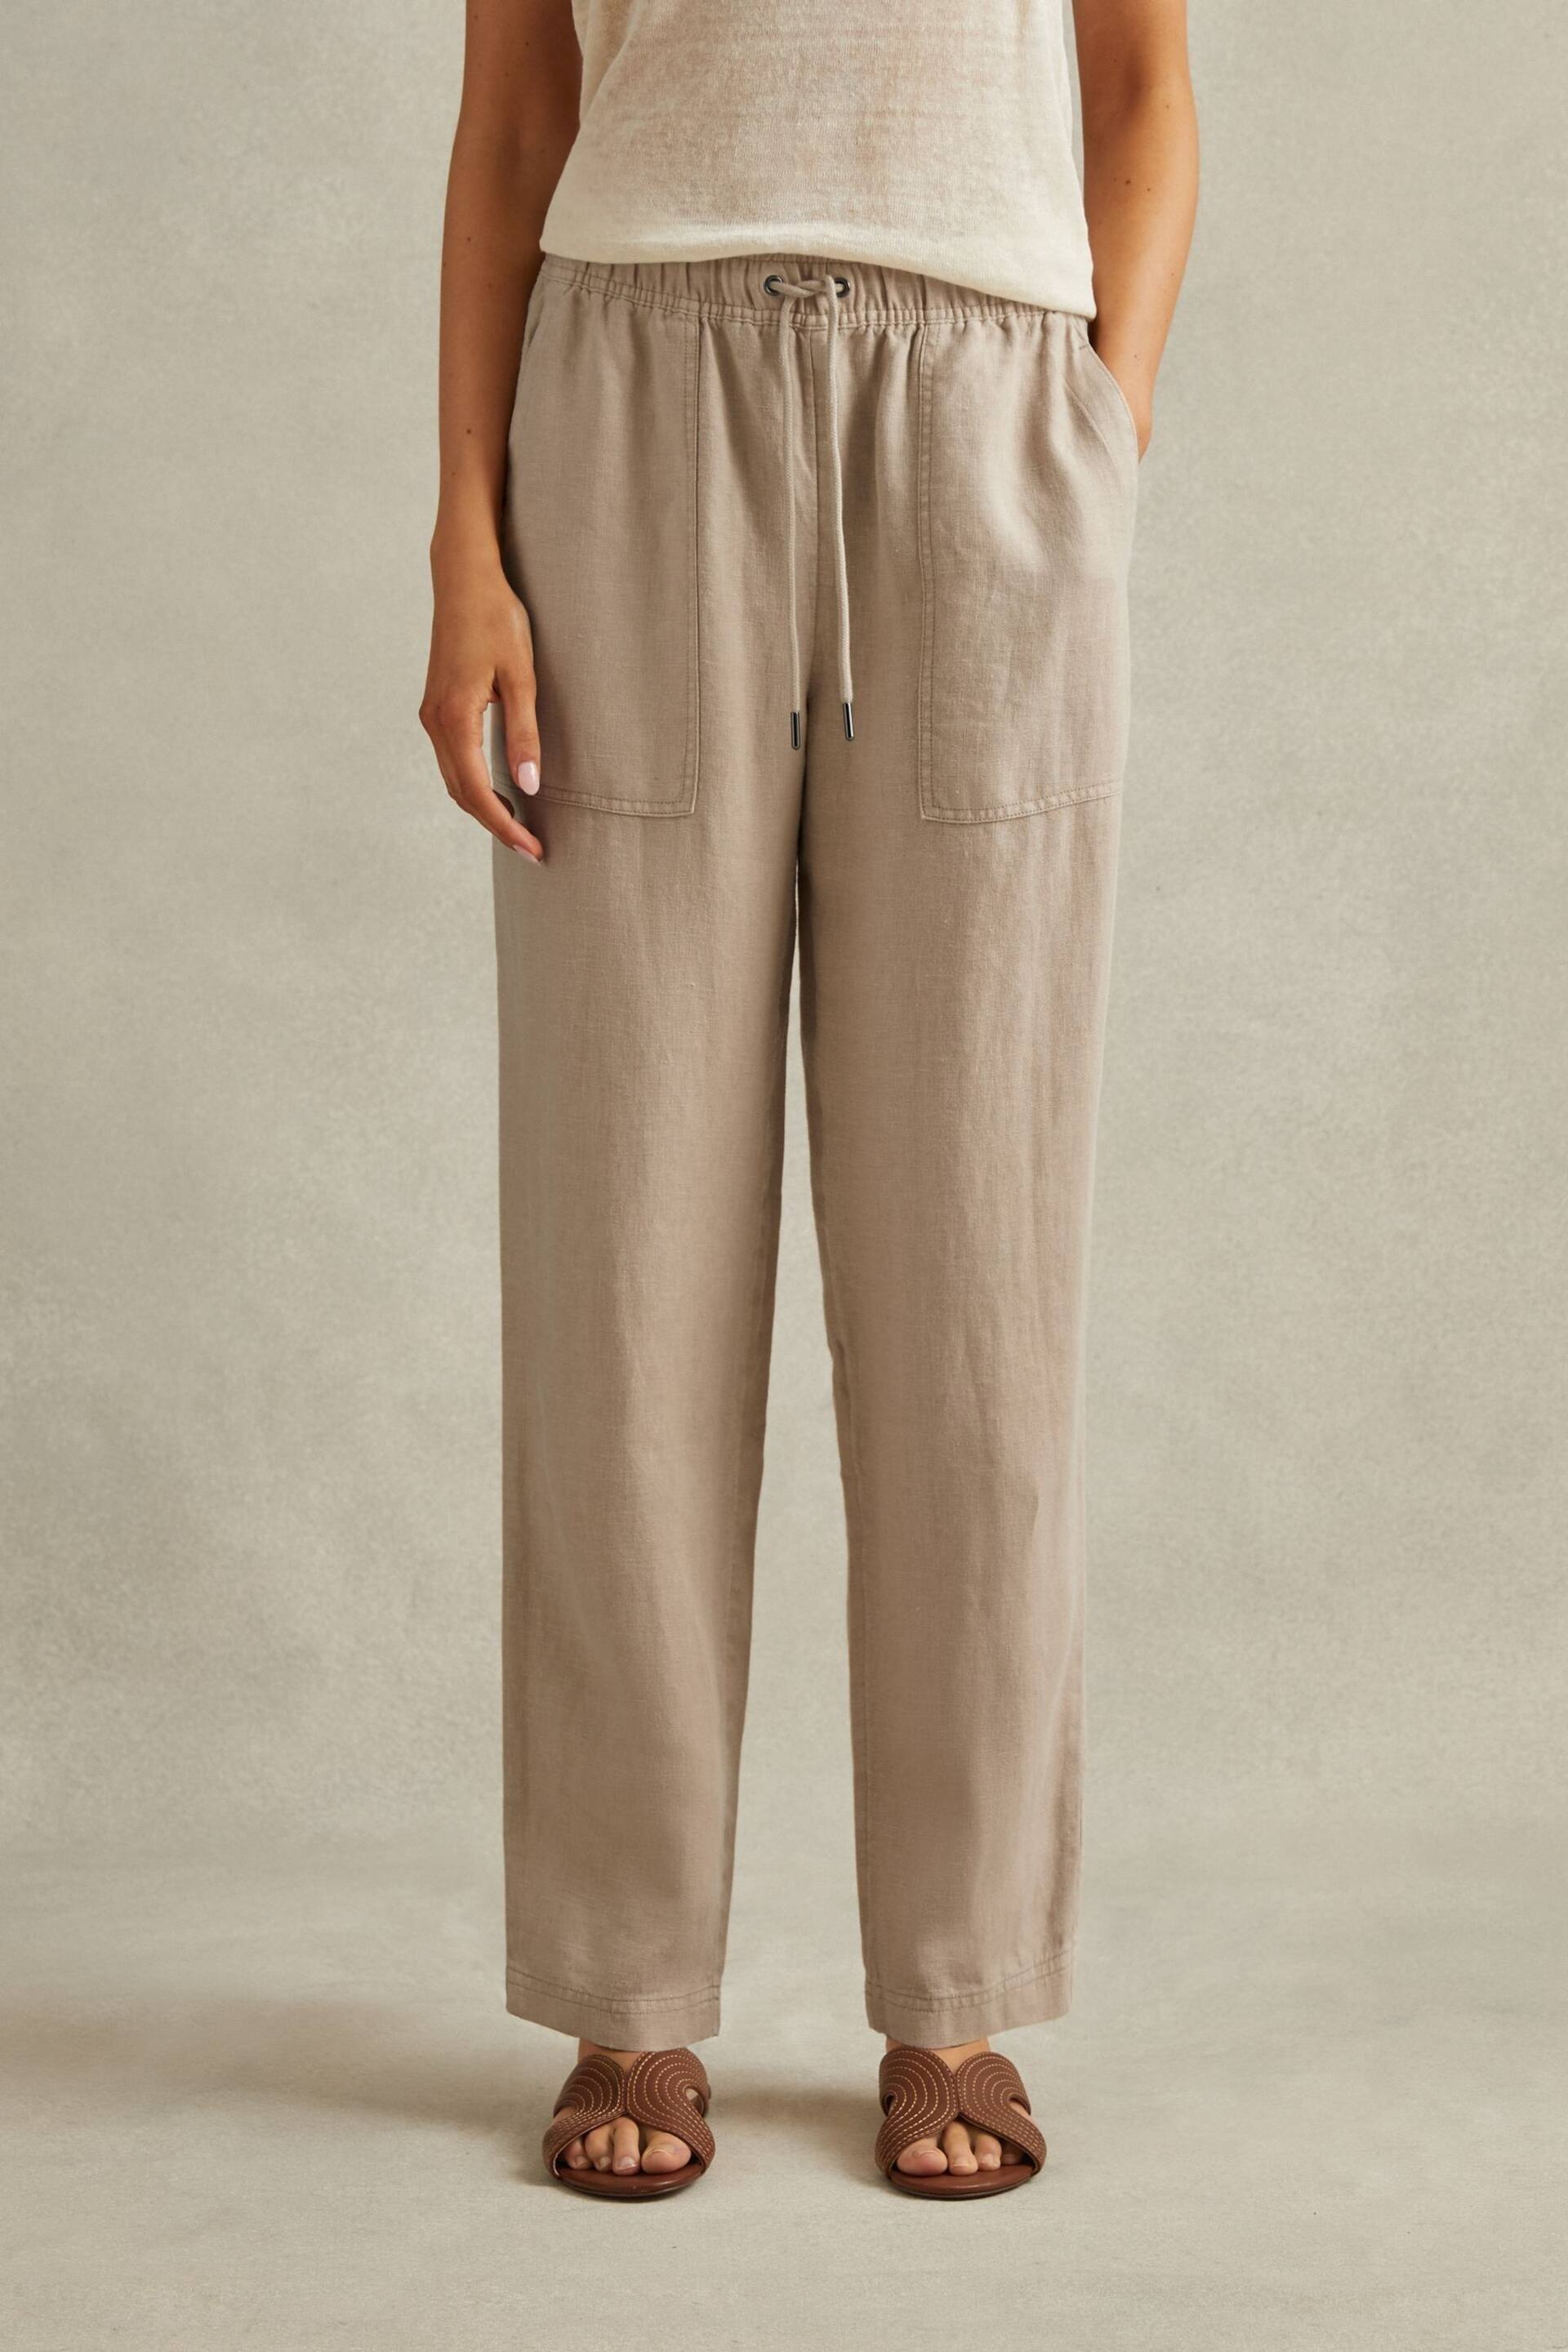 Reiss Sand Romie Drawstring Linen Trousers - Image 3 of 6